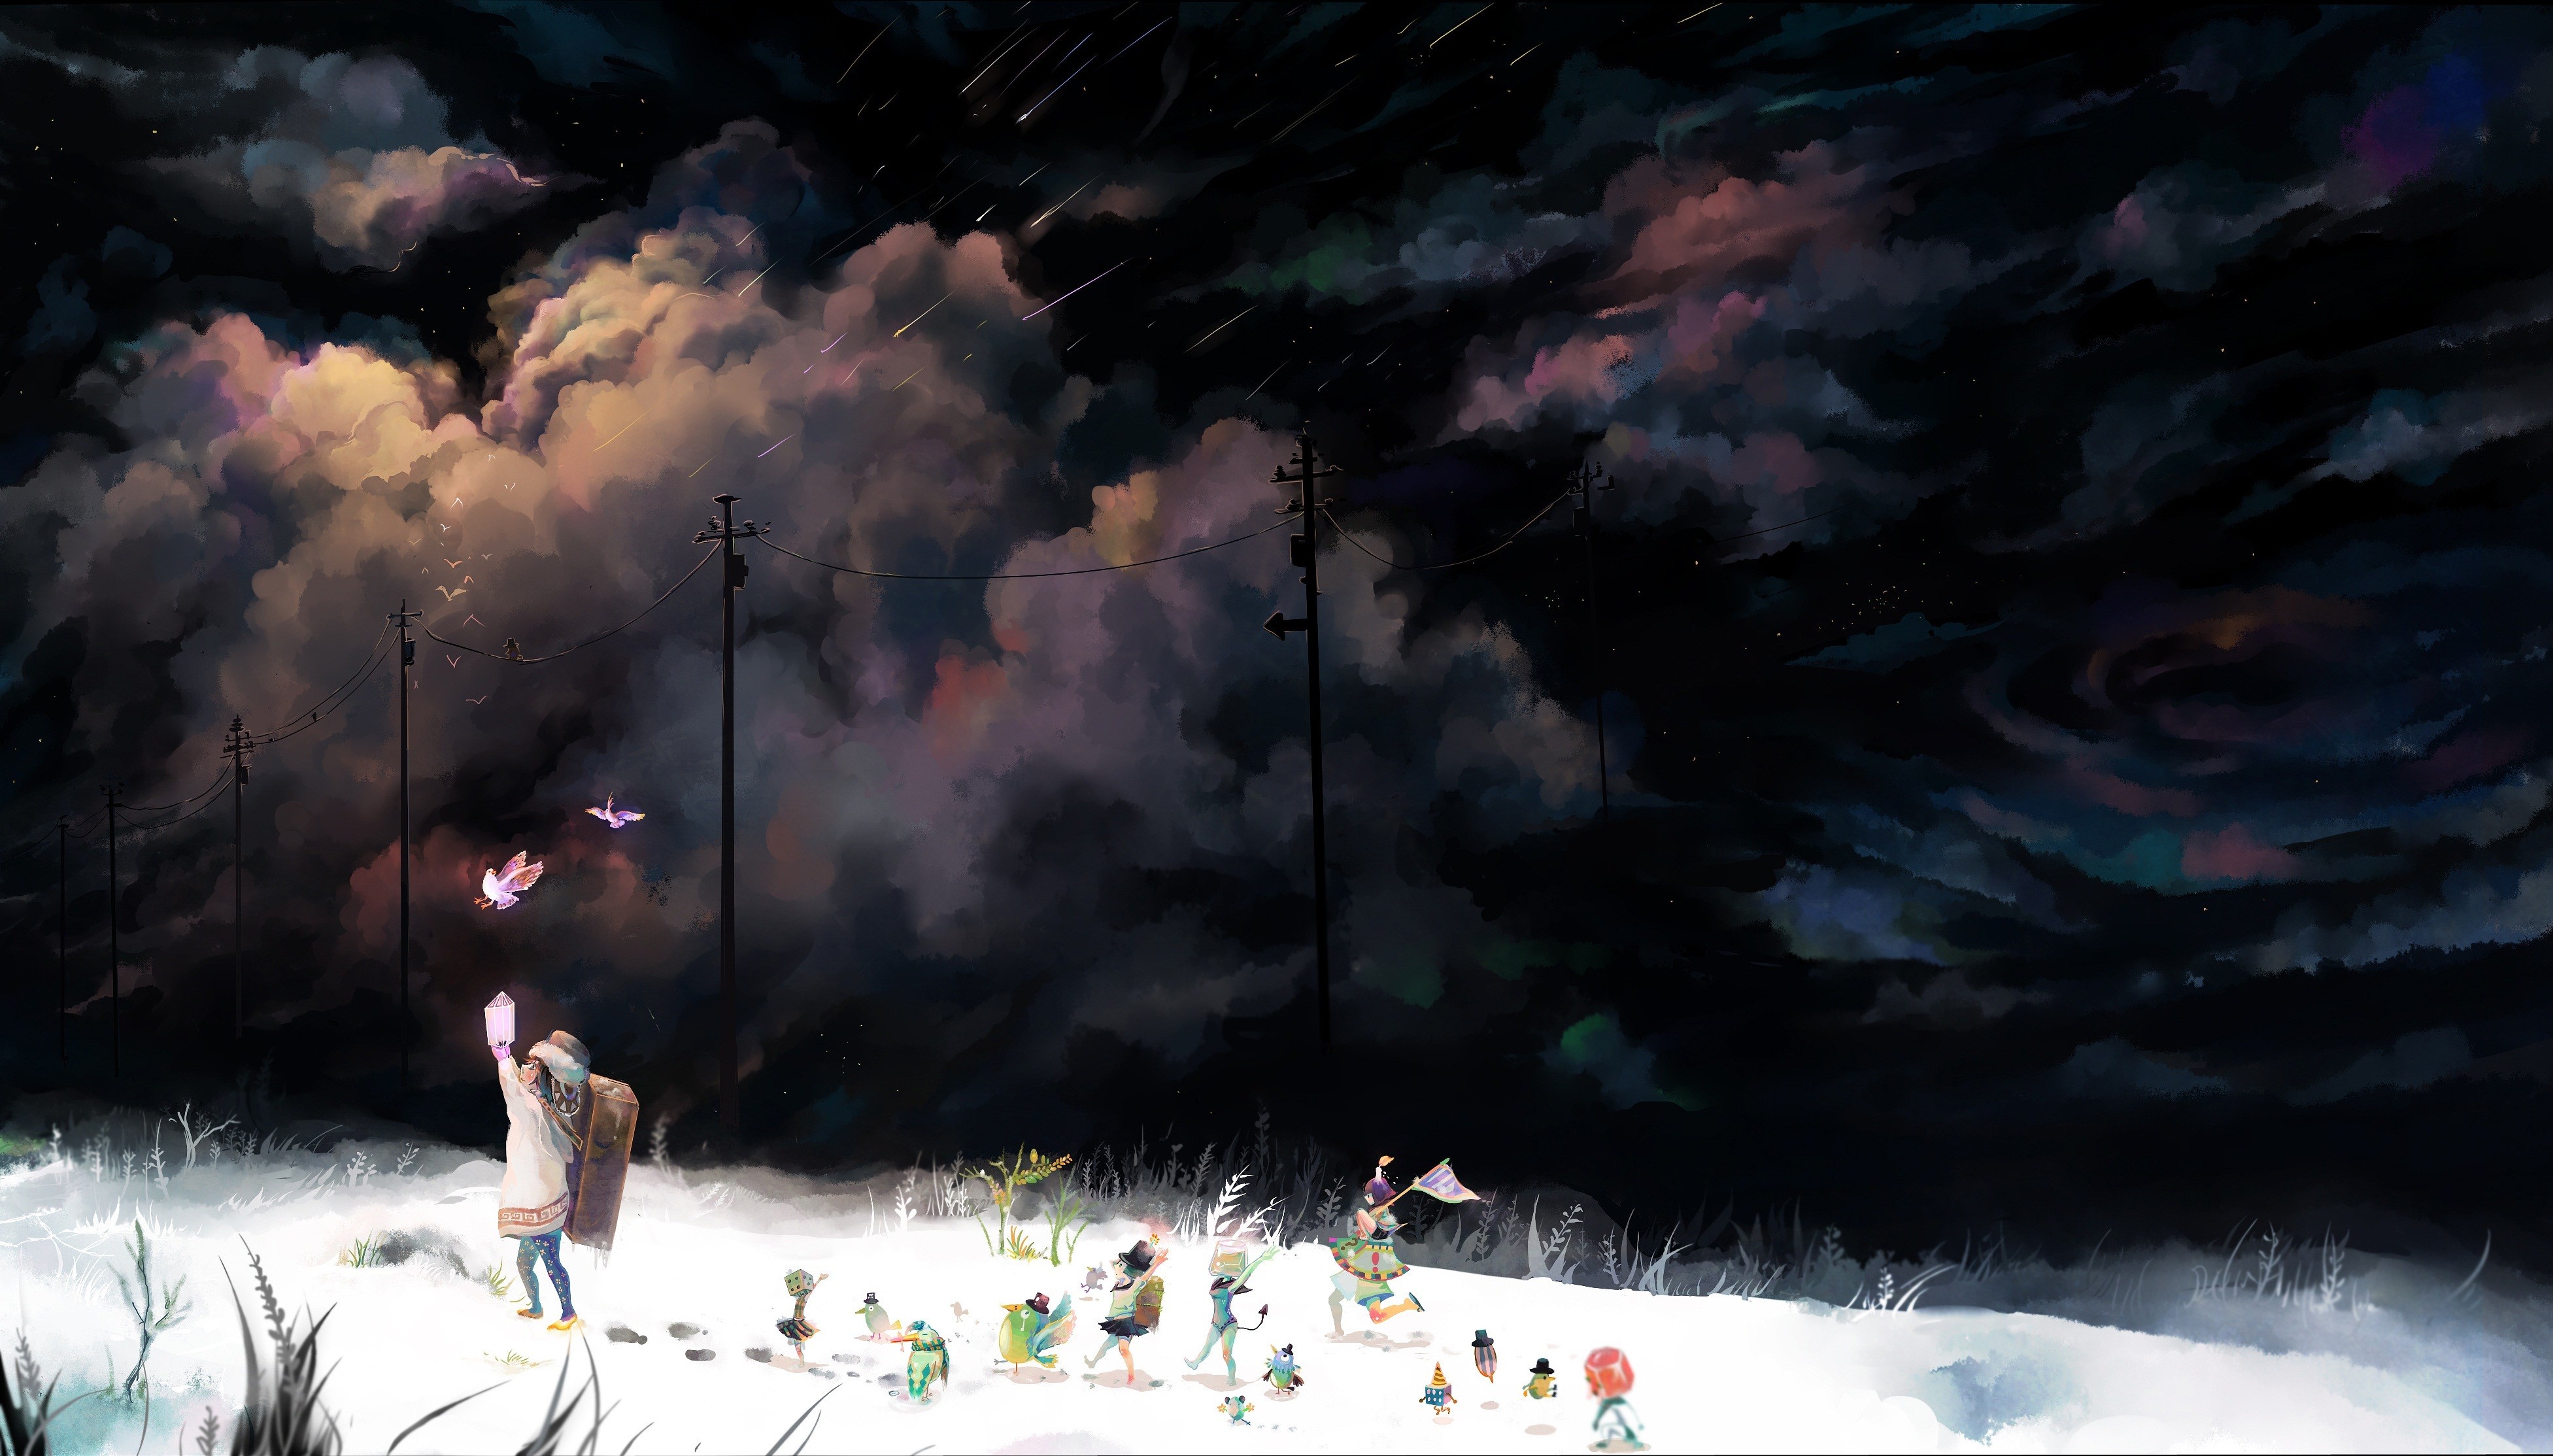 Anime 3905x2227 anime artwork snow children outdoors dark sky power lines